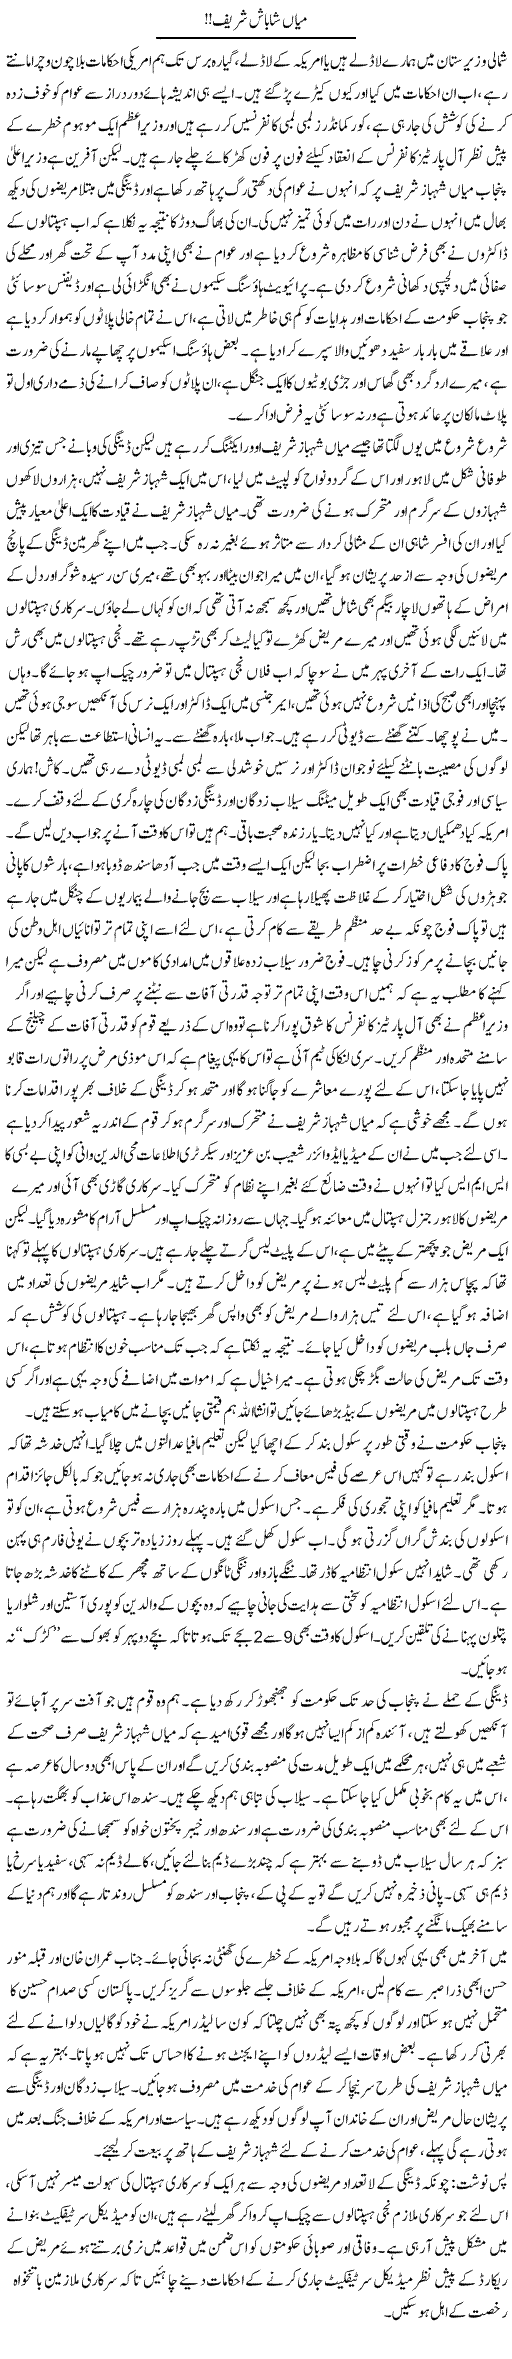 Shahbaz Sharif Express Column Asadullah Ghalib 27 September 2011